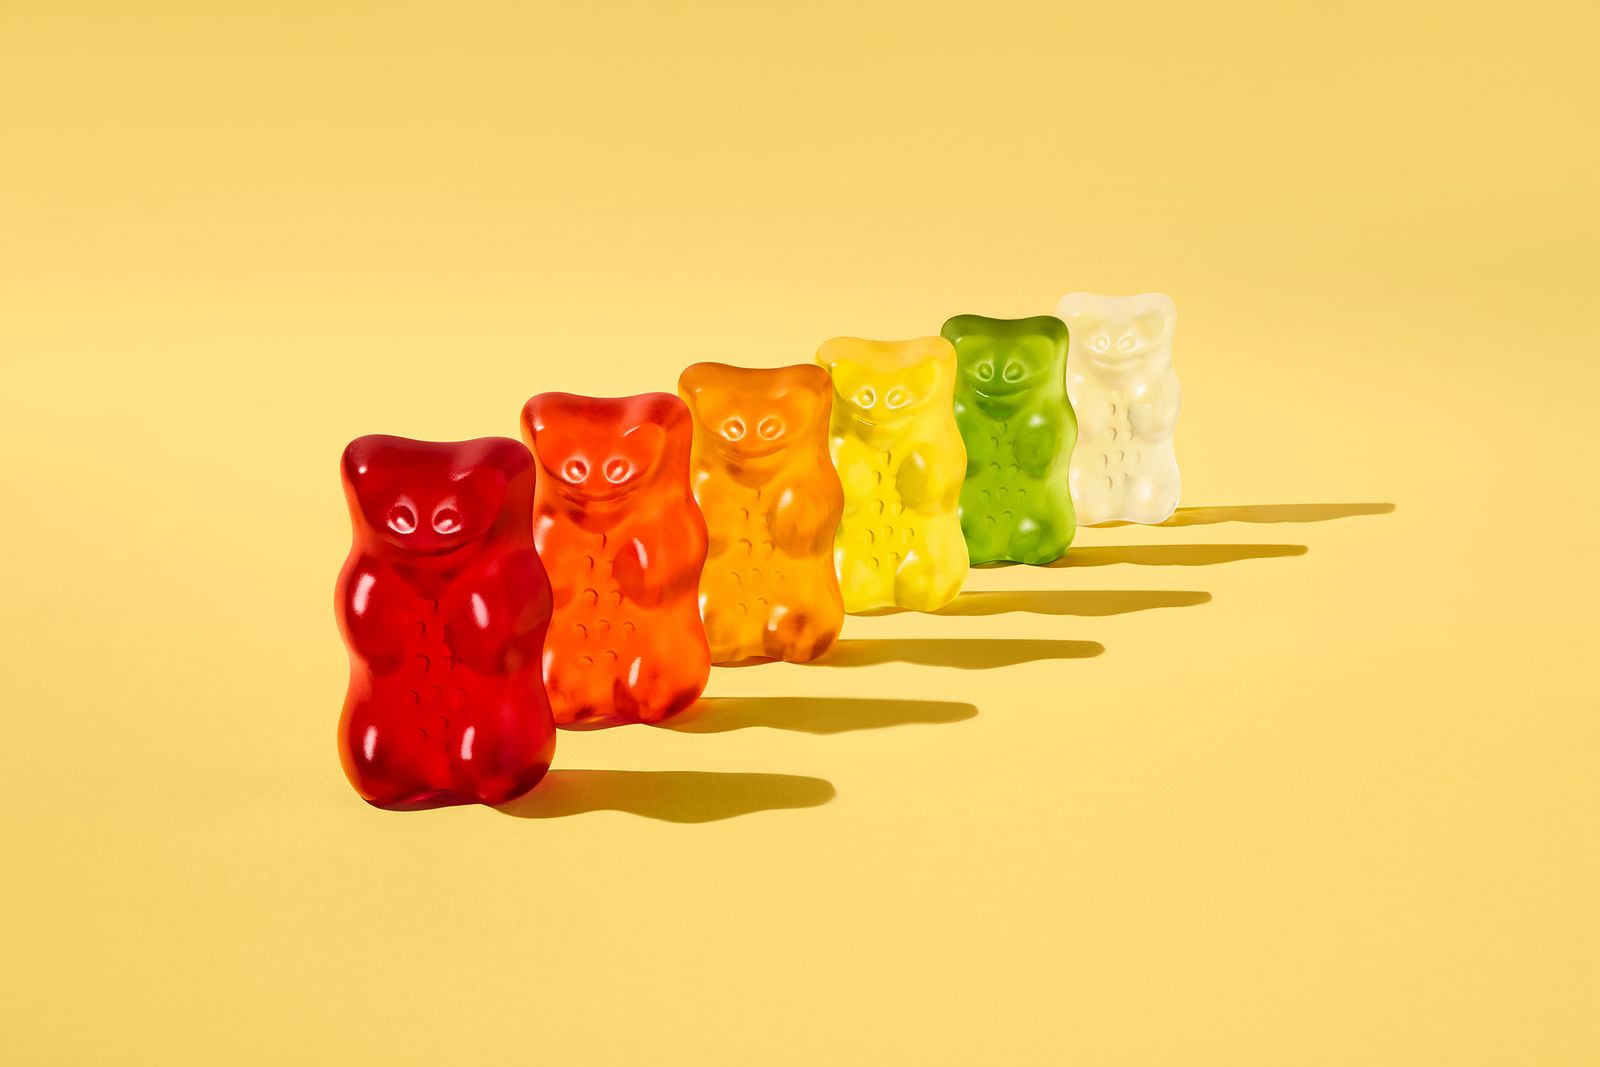 Adventures of the Gummi Bears - Wikipedia